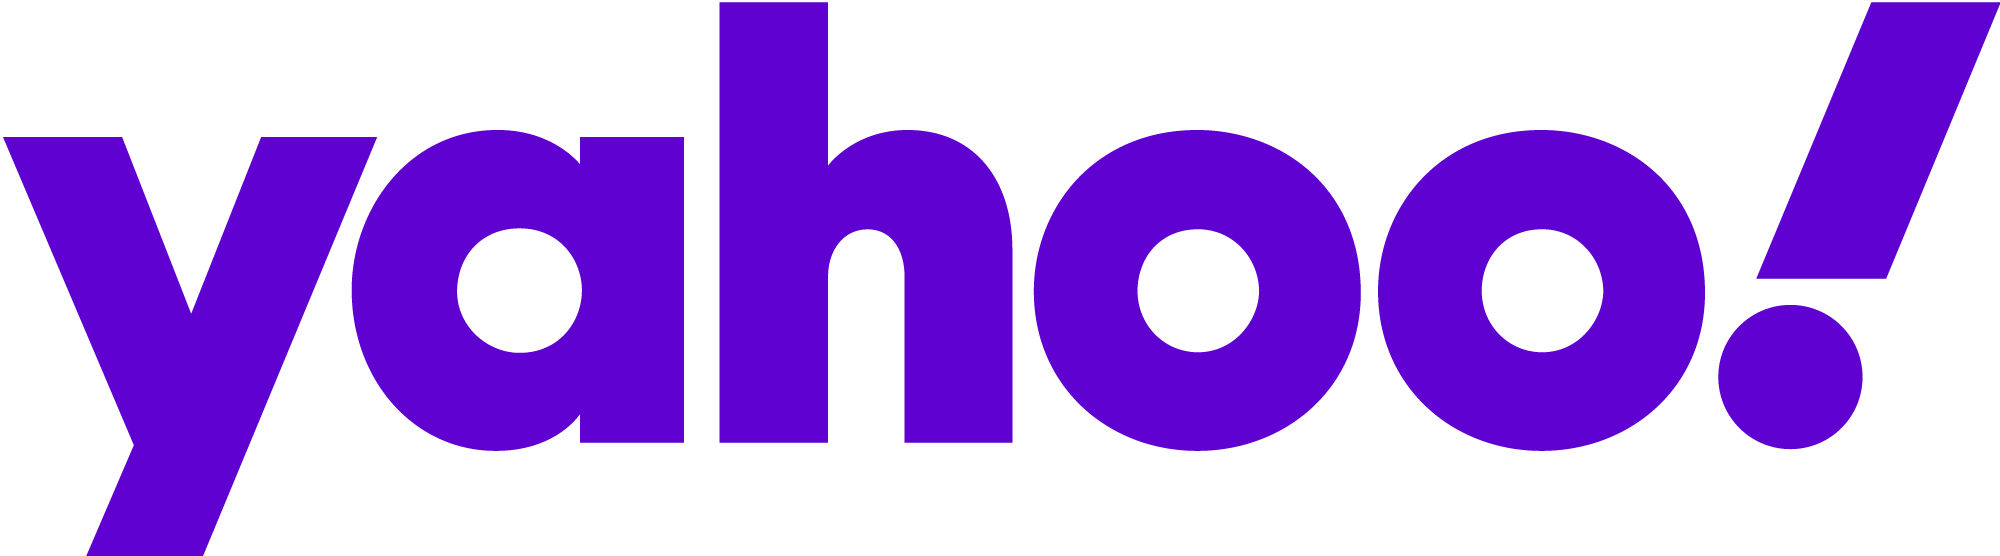 Yahoo Logo PNG